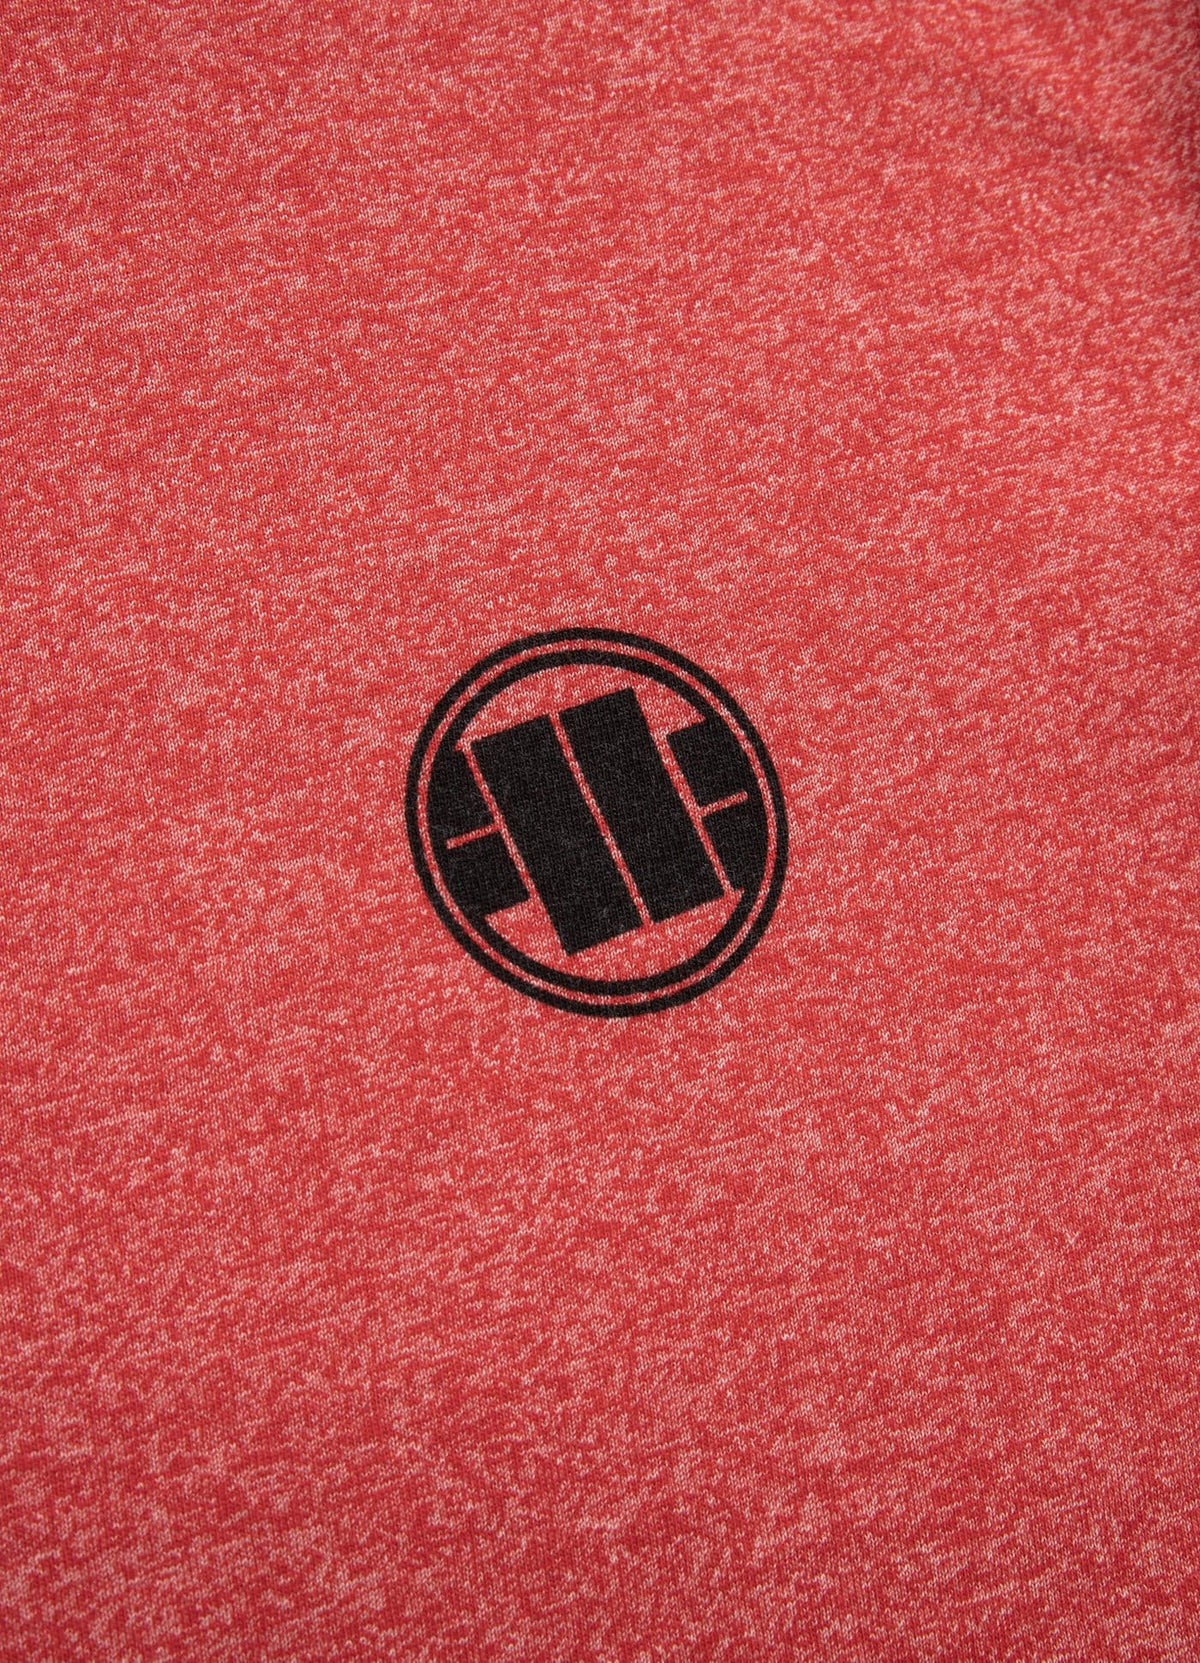 Small Logo Premium Red T-shirt.